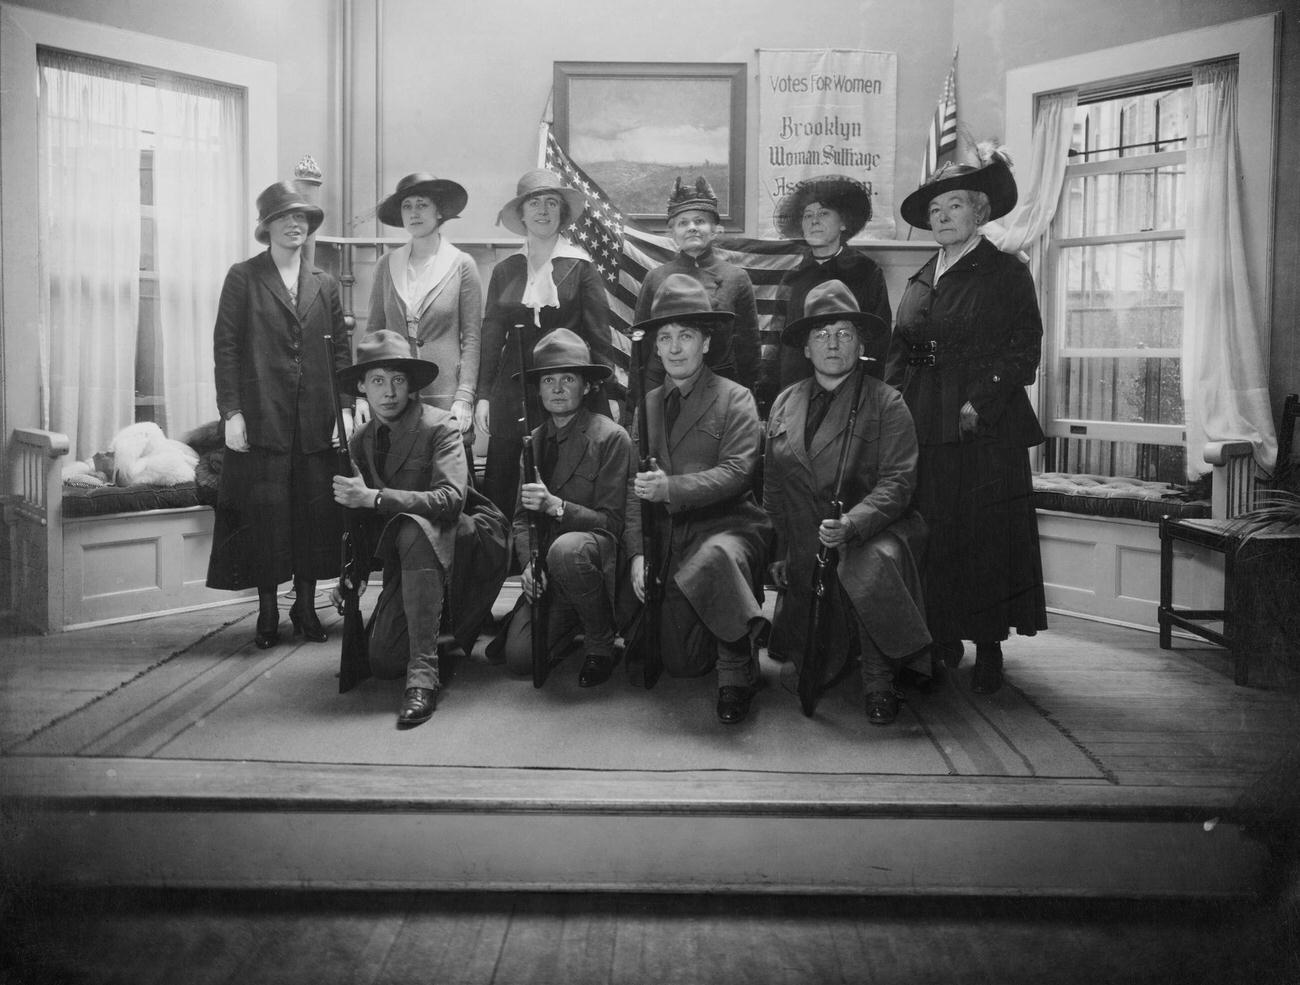 Brooklyn Woman Suffrage Association Members In Rifle Class, Circa 1915